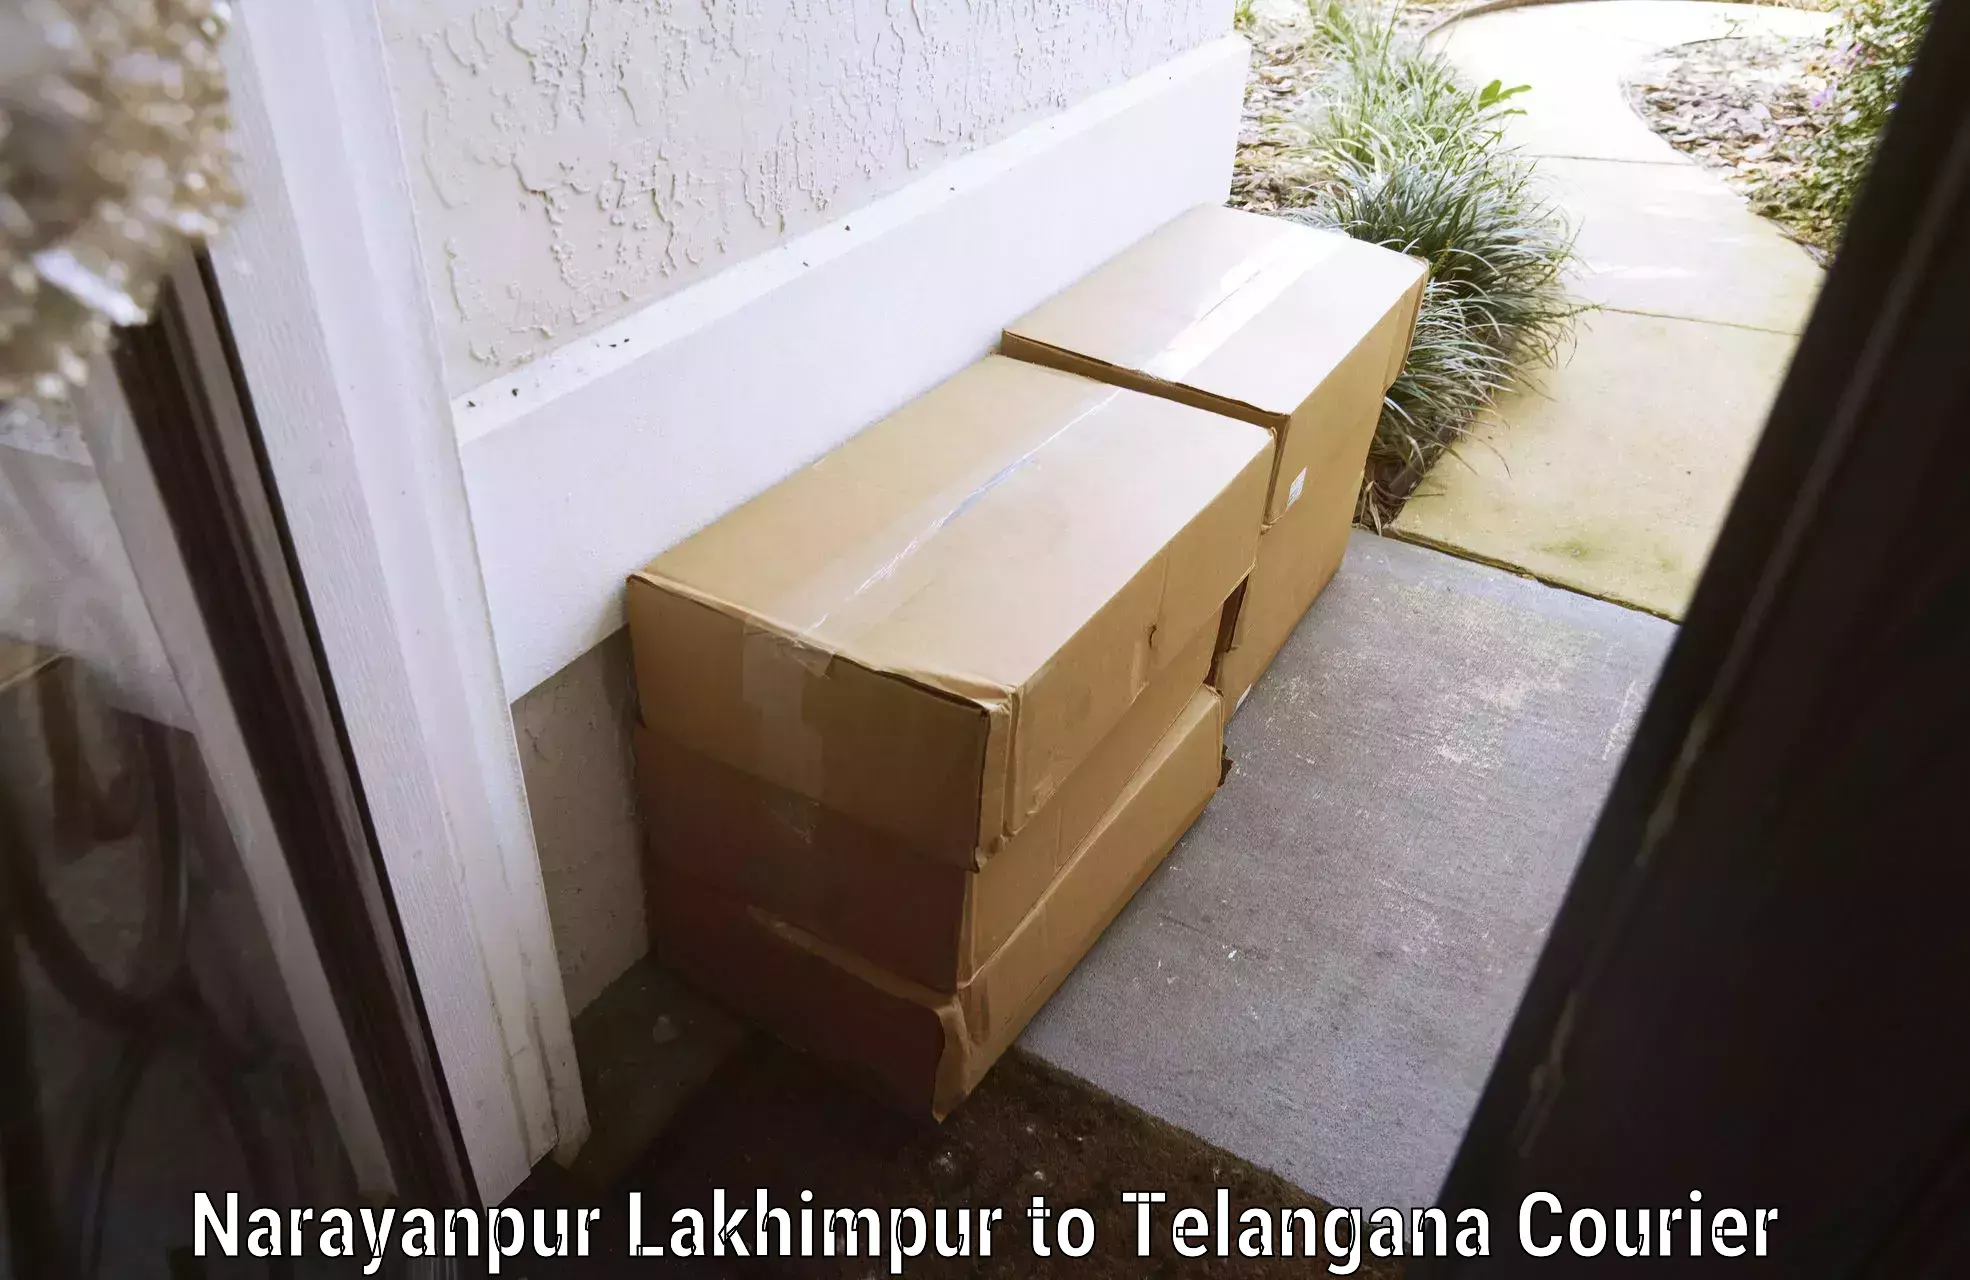 Baggage shipping experts Narayanpur Lakhimpur to Haliya